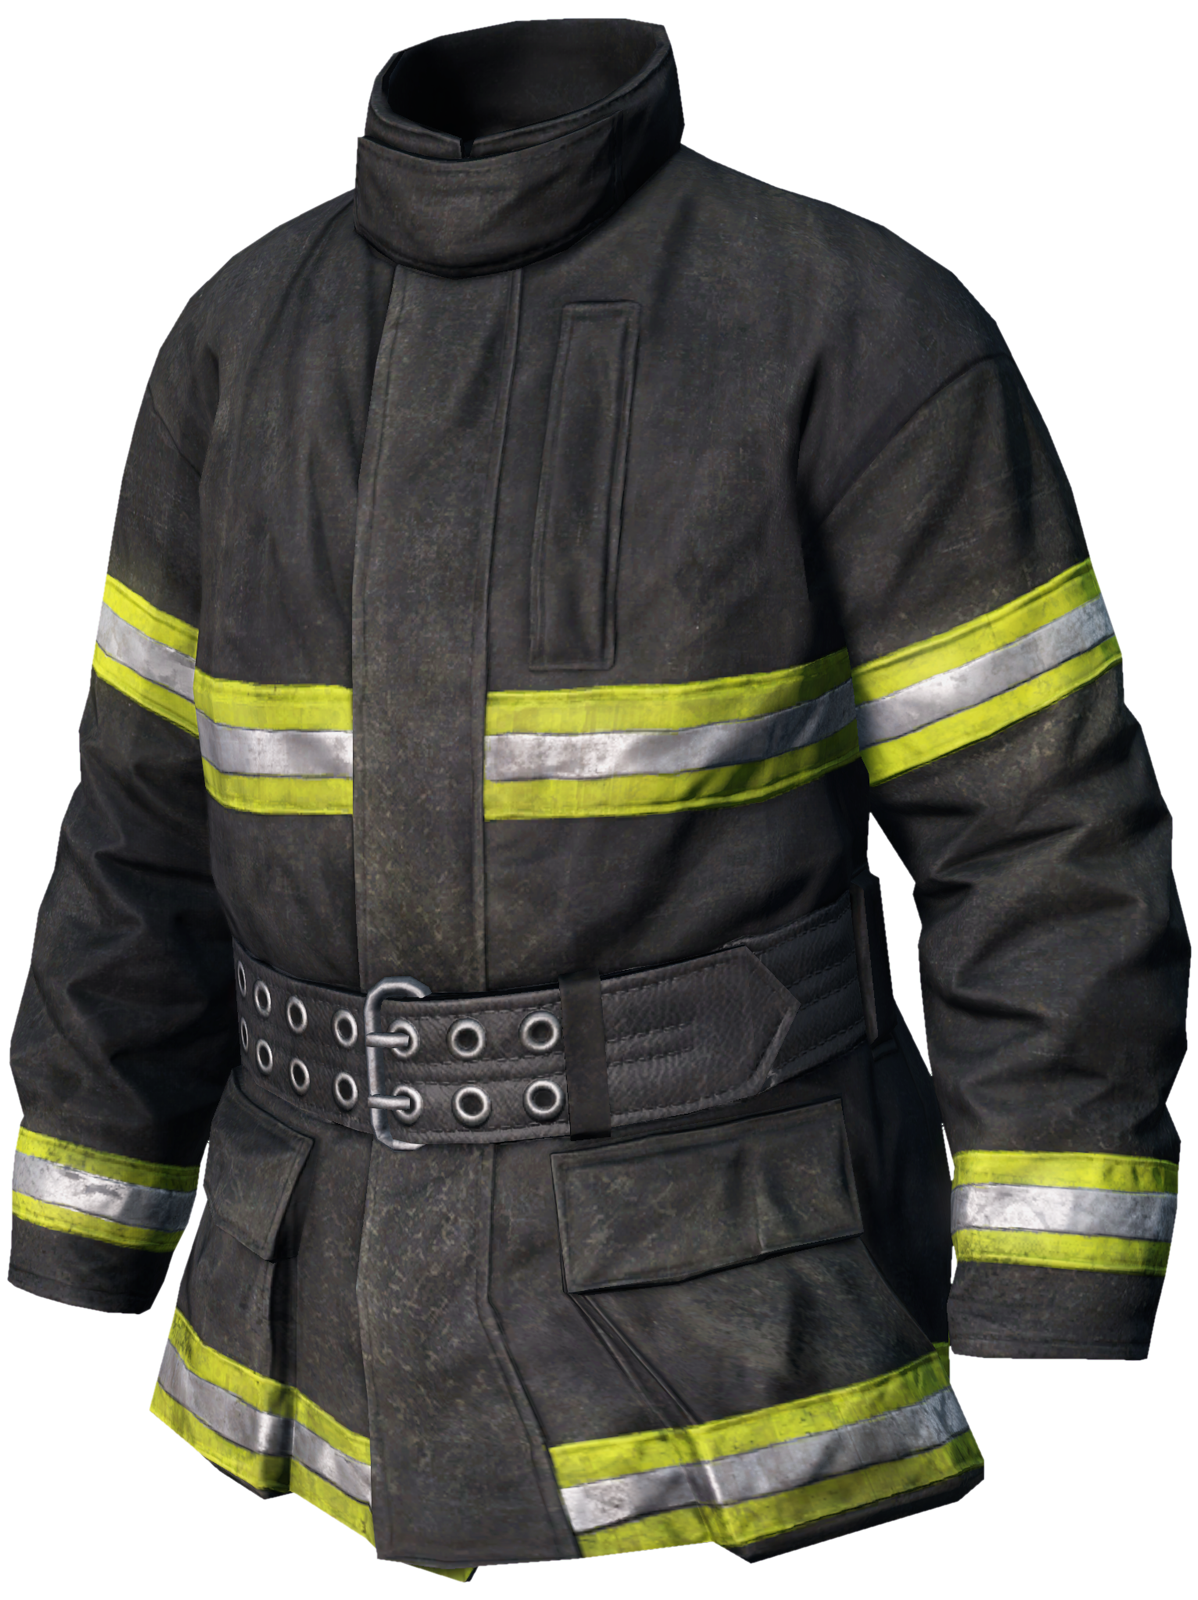 Firefighter Jacket - DayZ Wiki